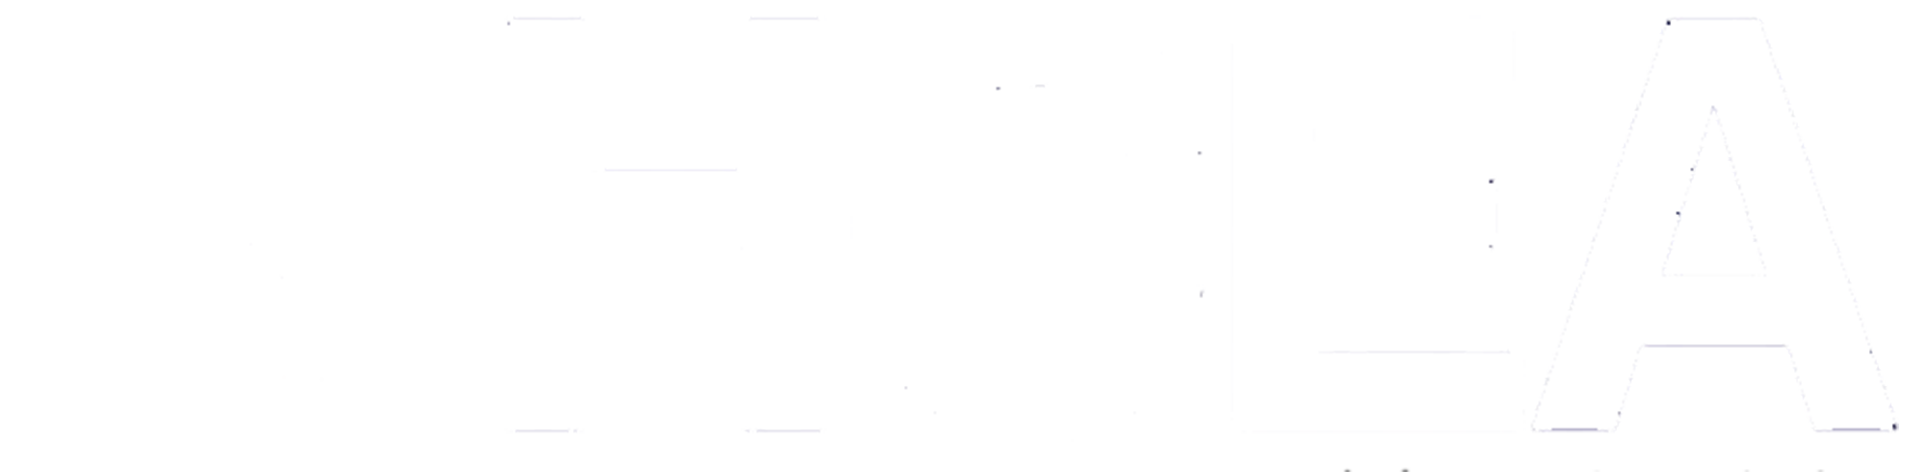 hcea-mark